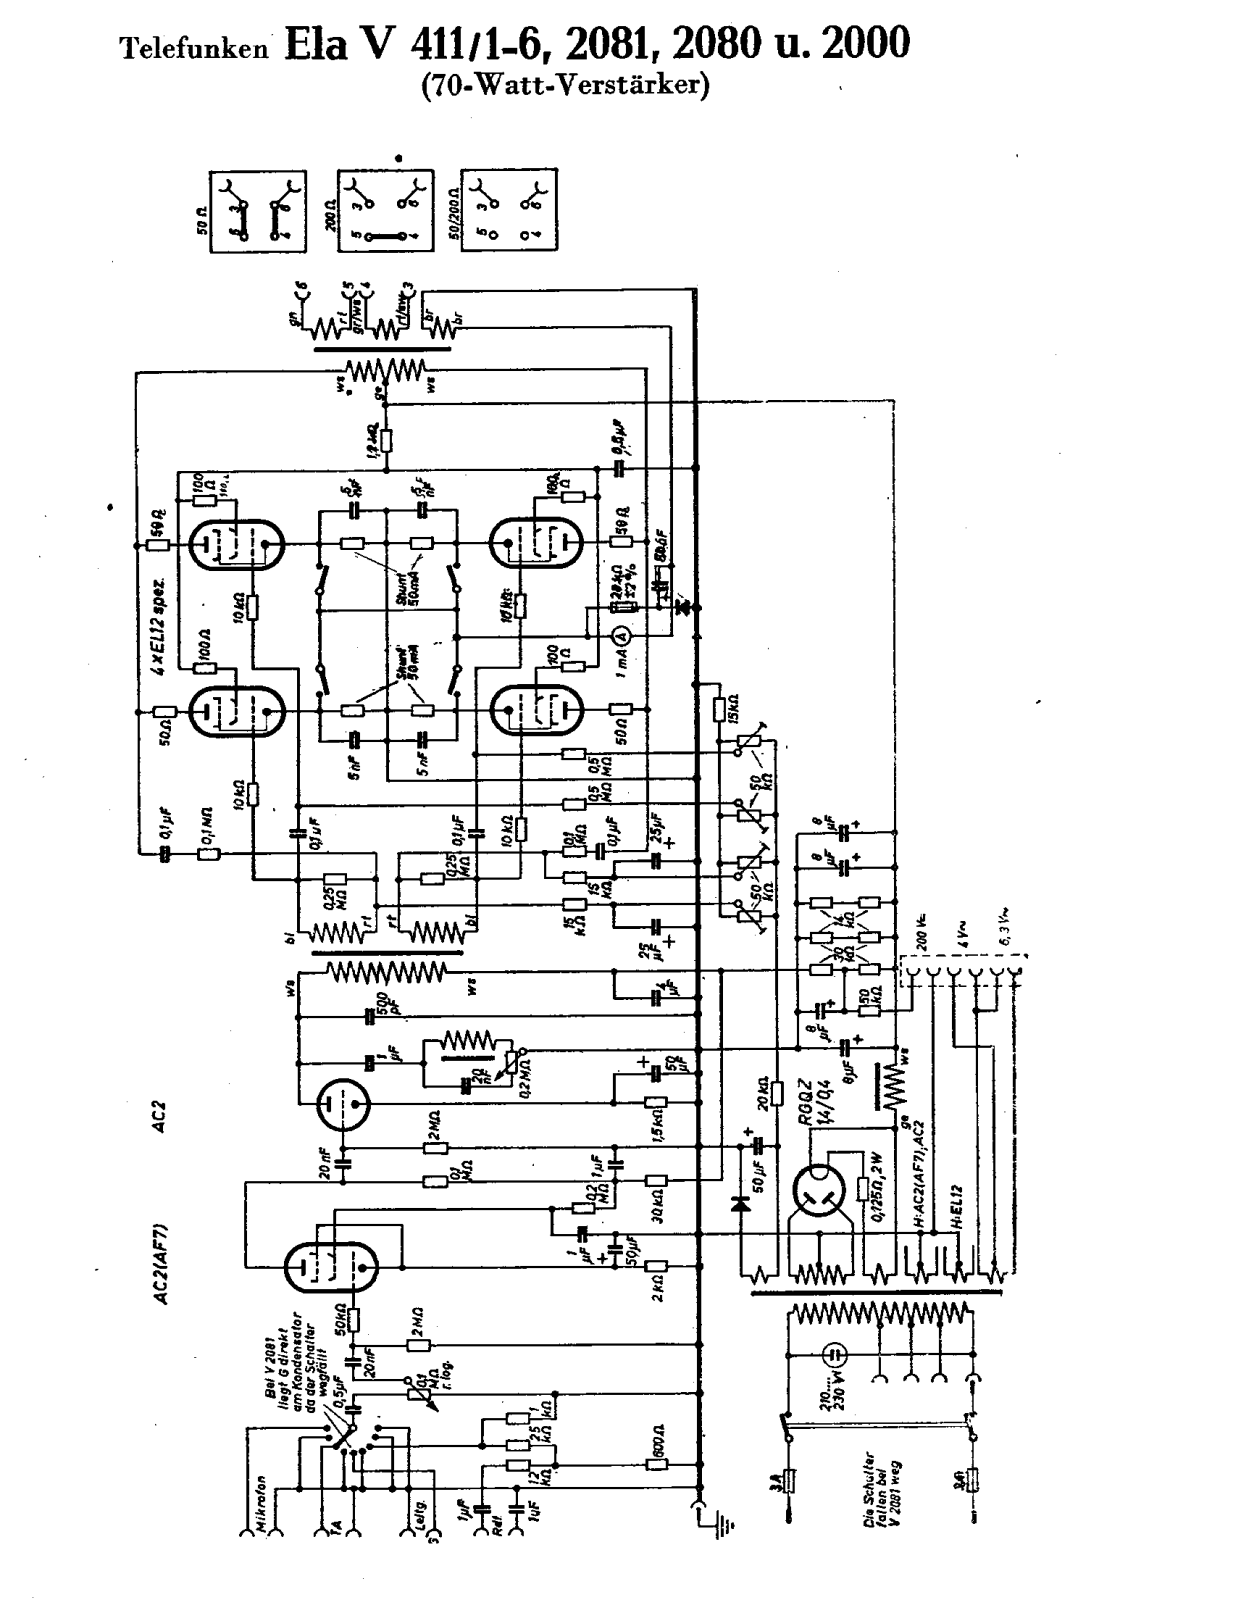 Telefunken V2000, V2081, V2080, Ela V411 Cirquit Diagram